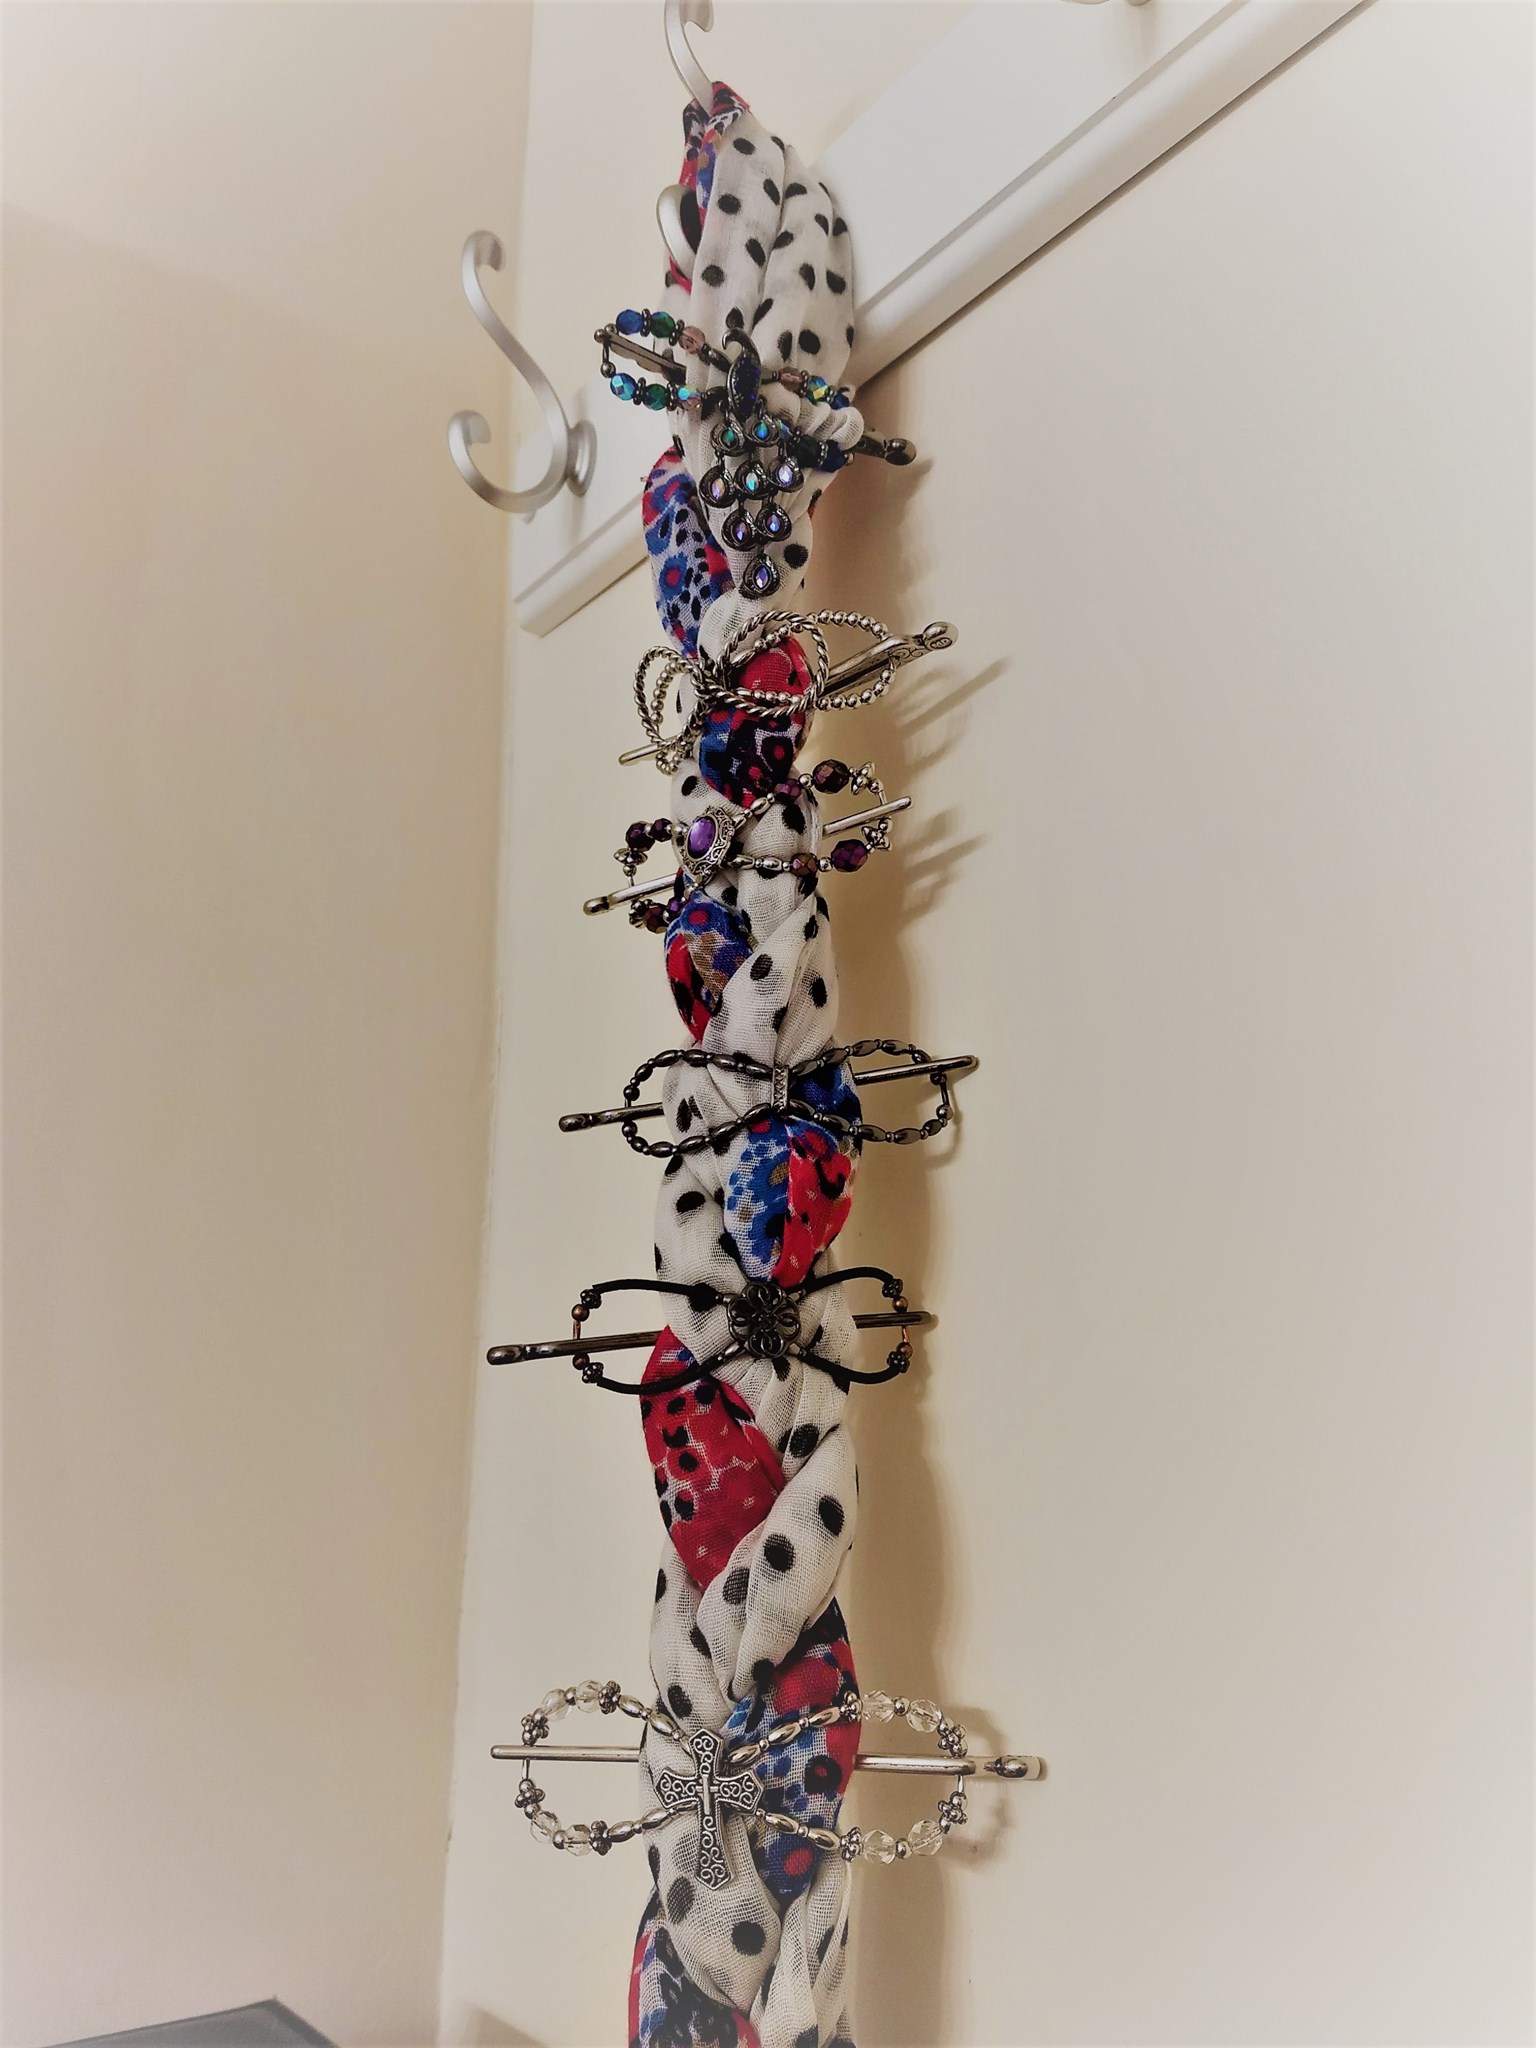 braided scarves organize hair clips